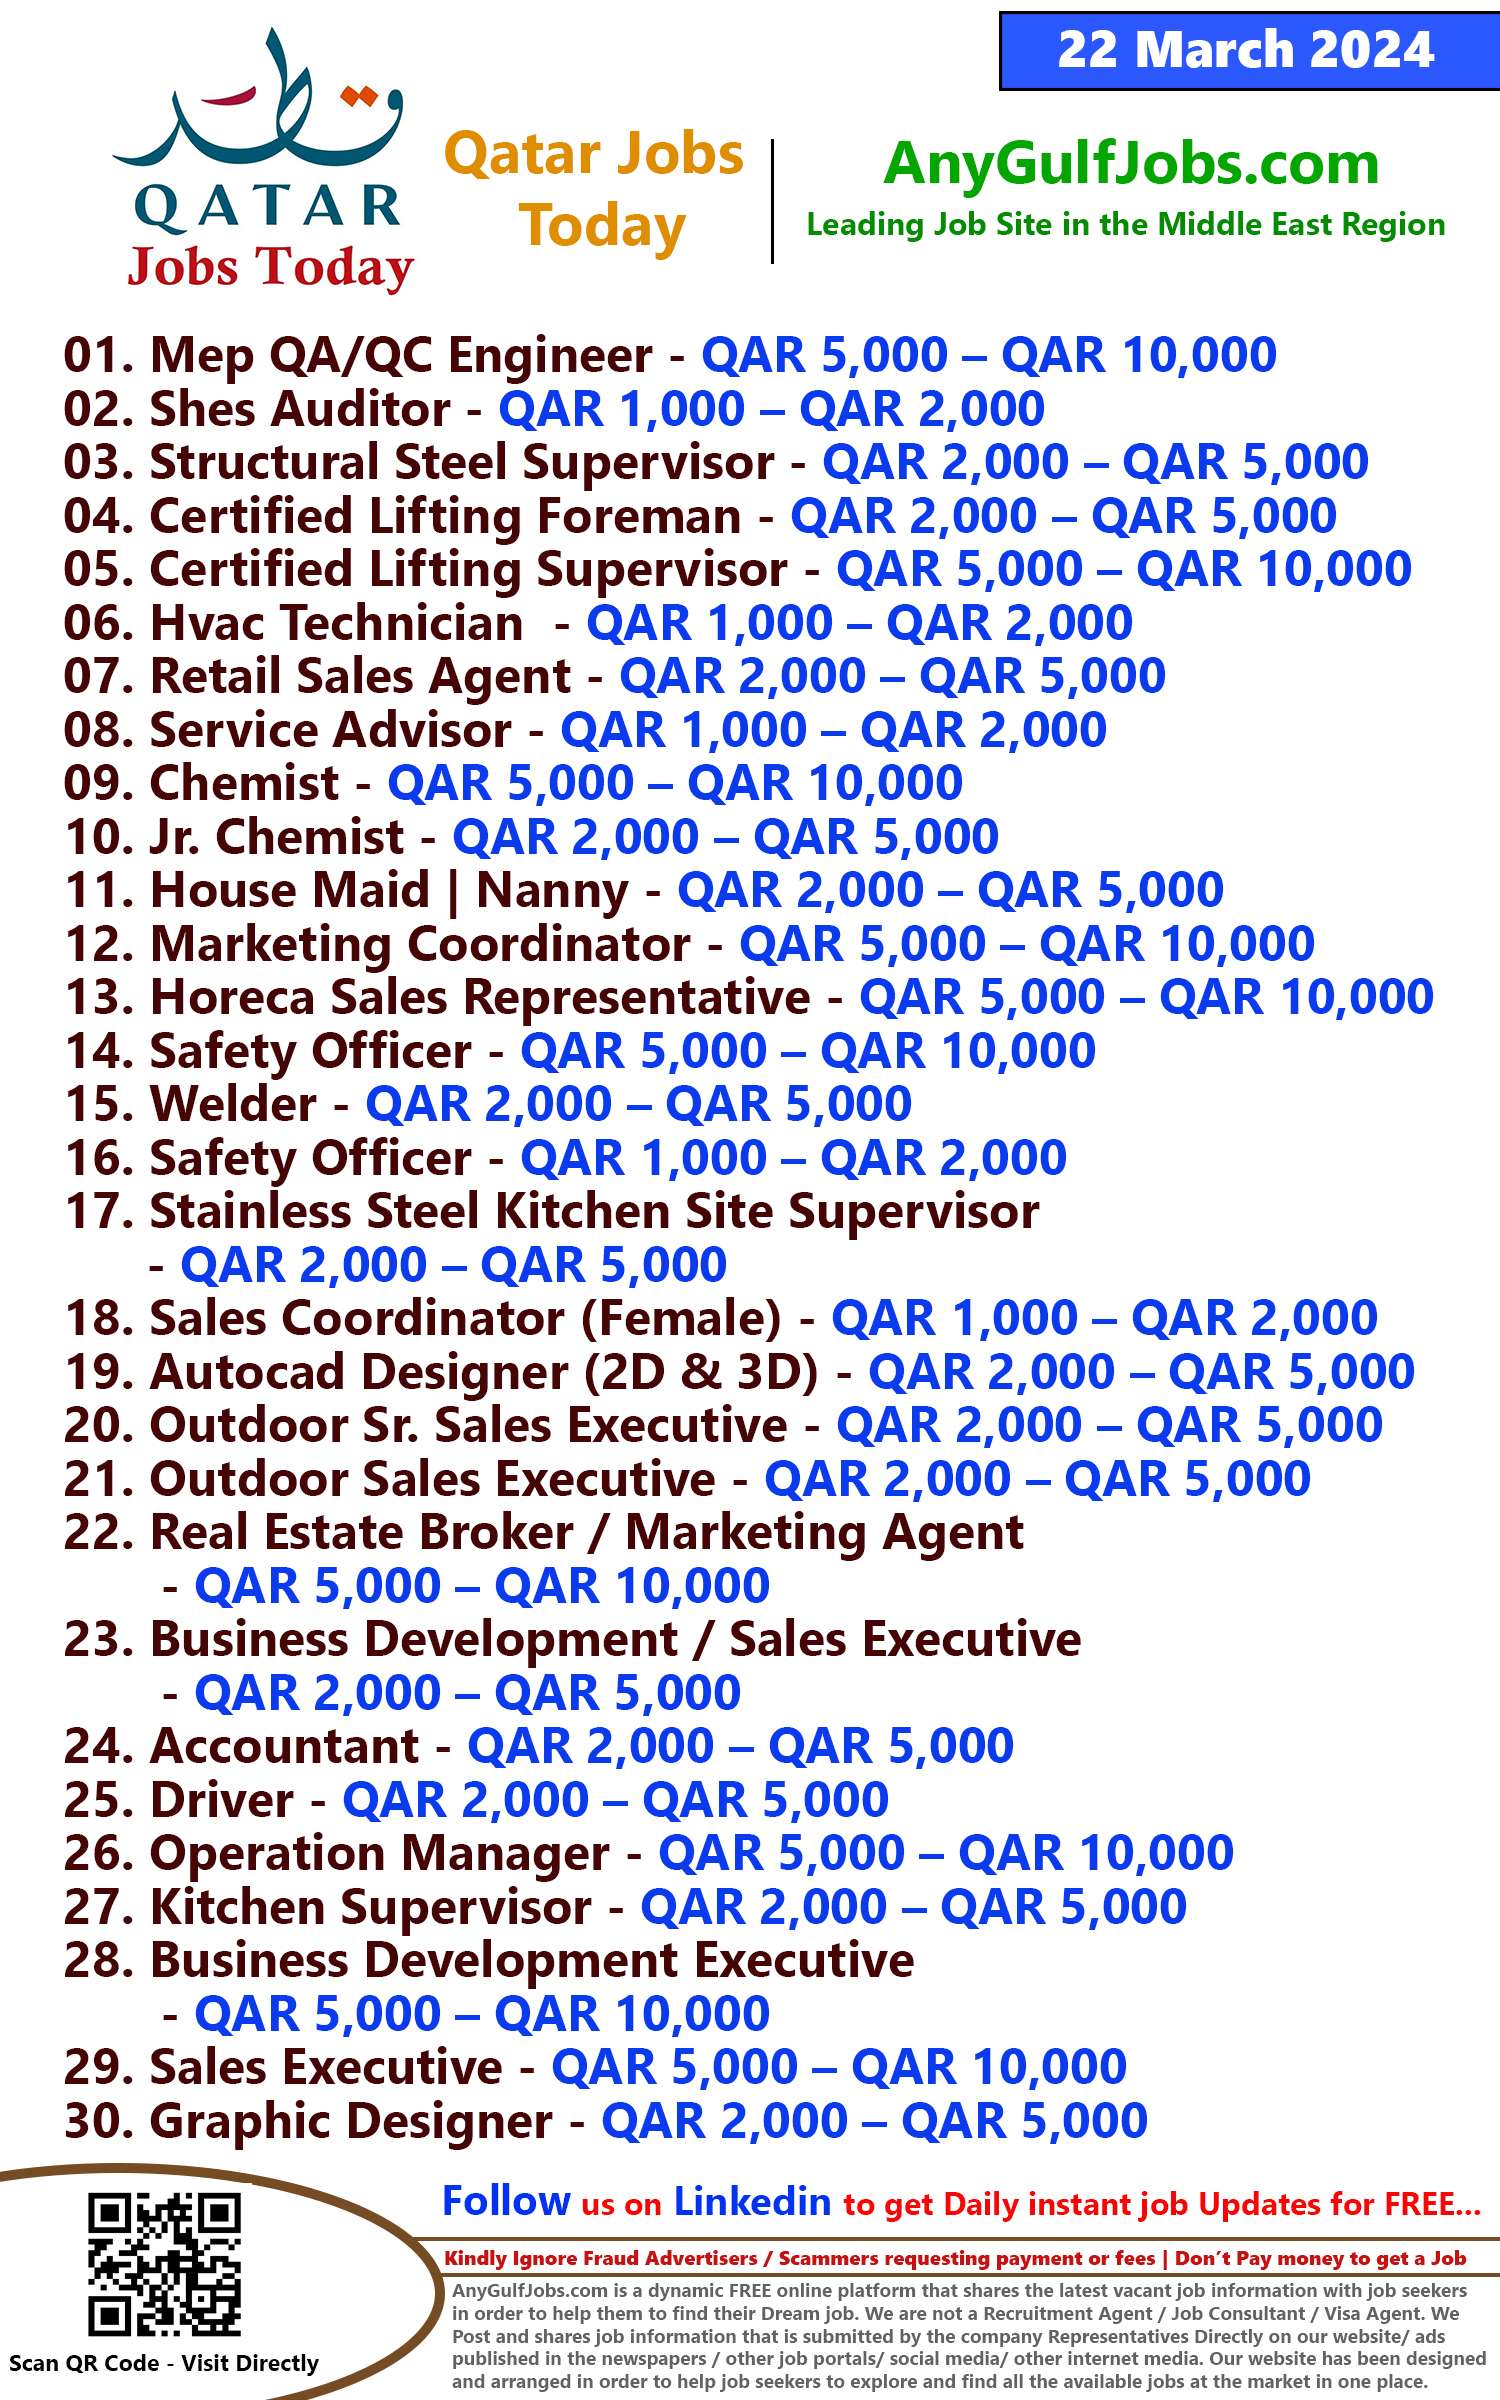 Qatar Jobs Today - 22 March 2024